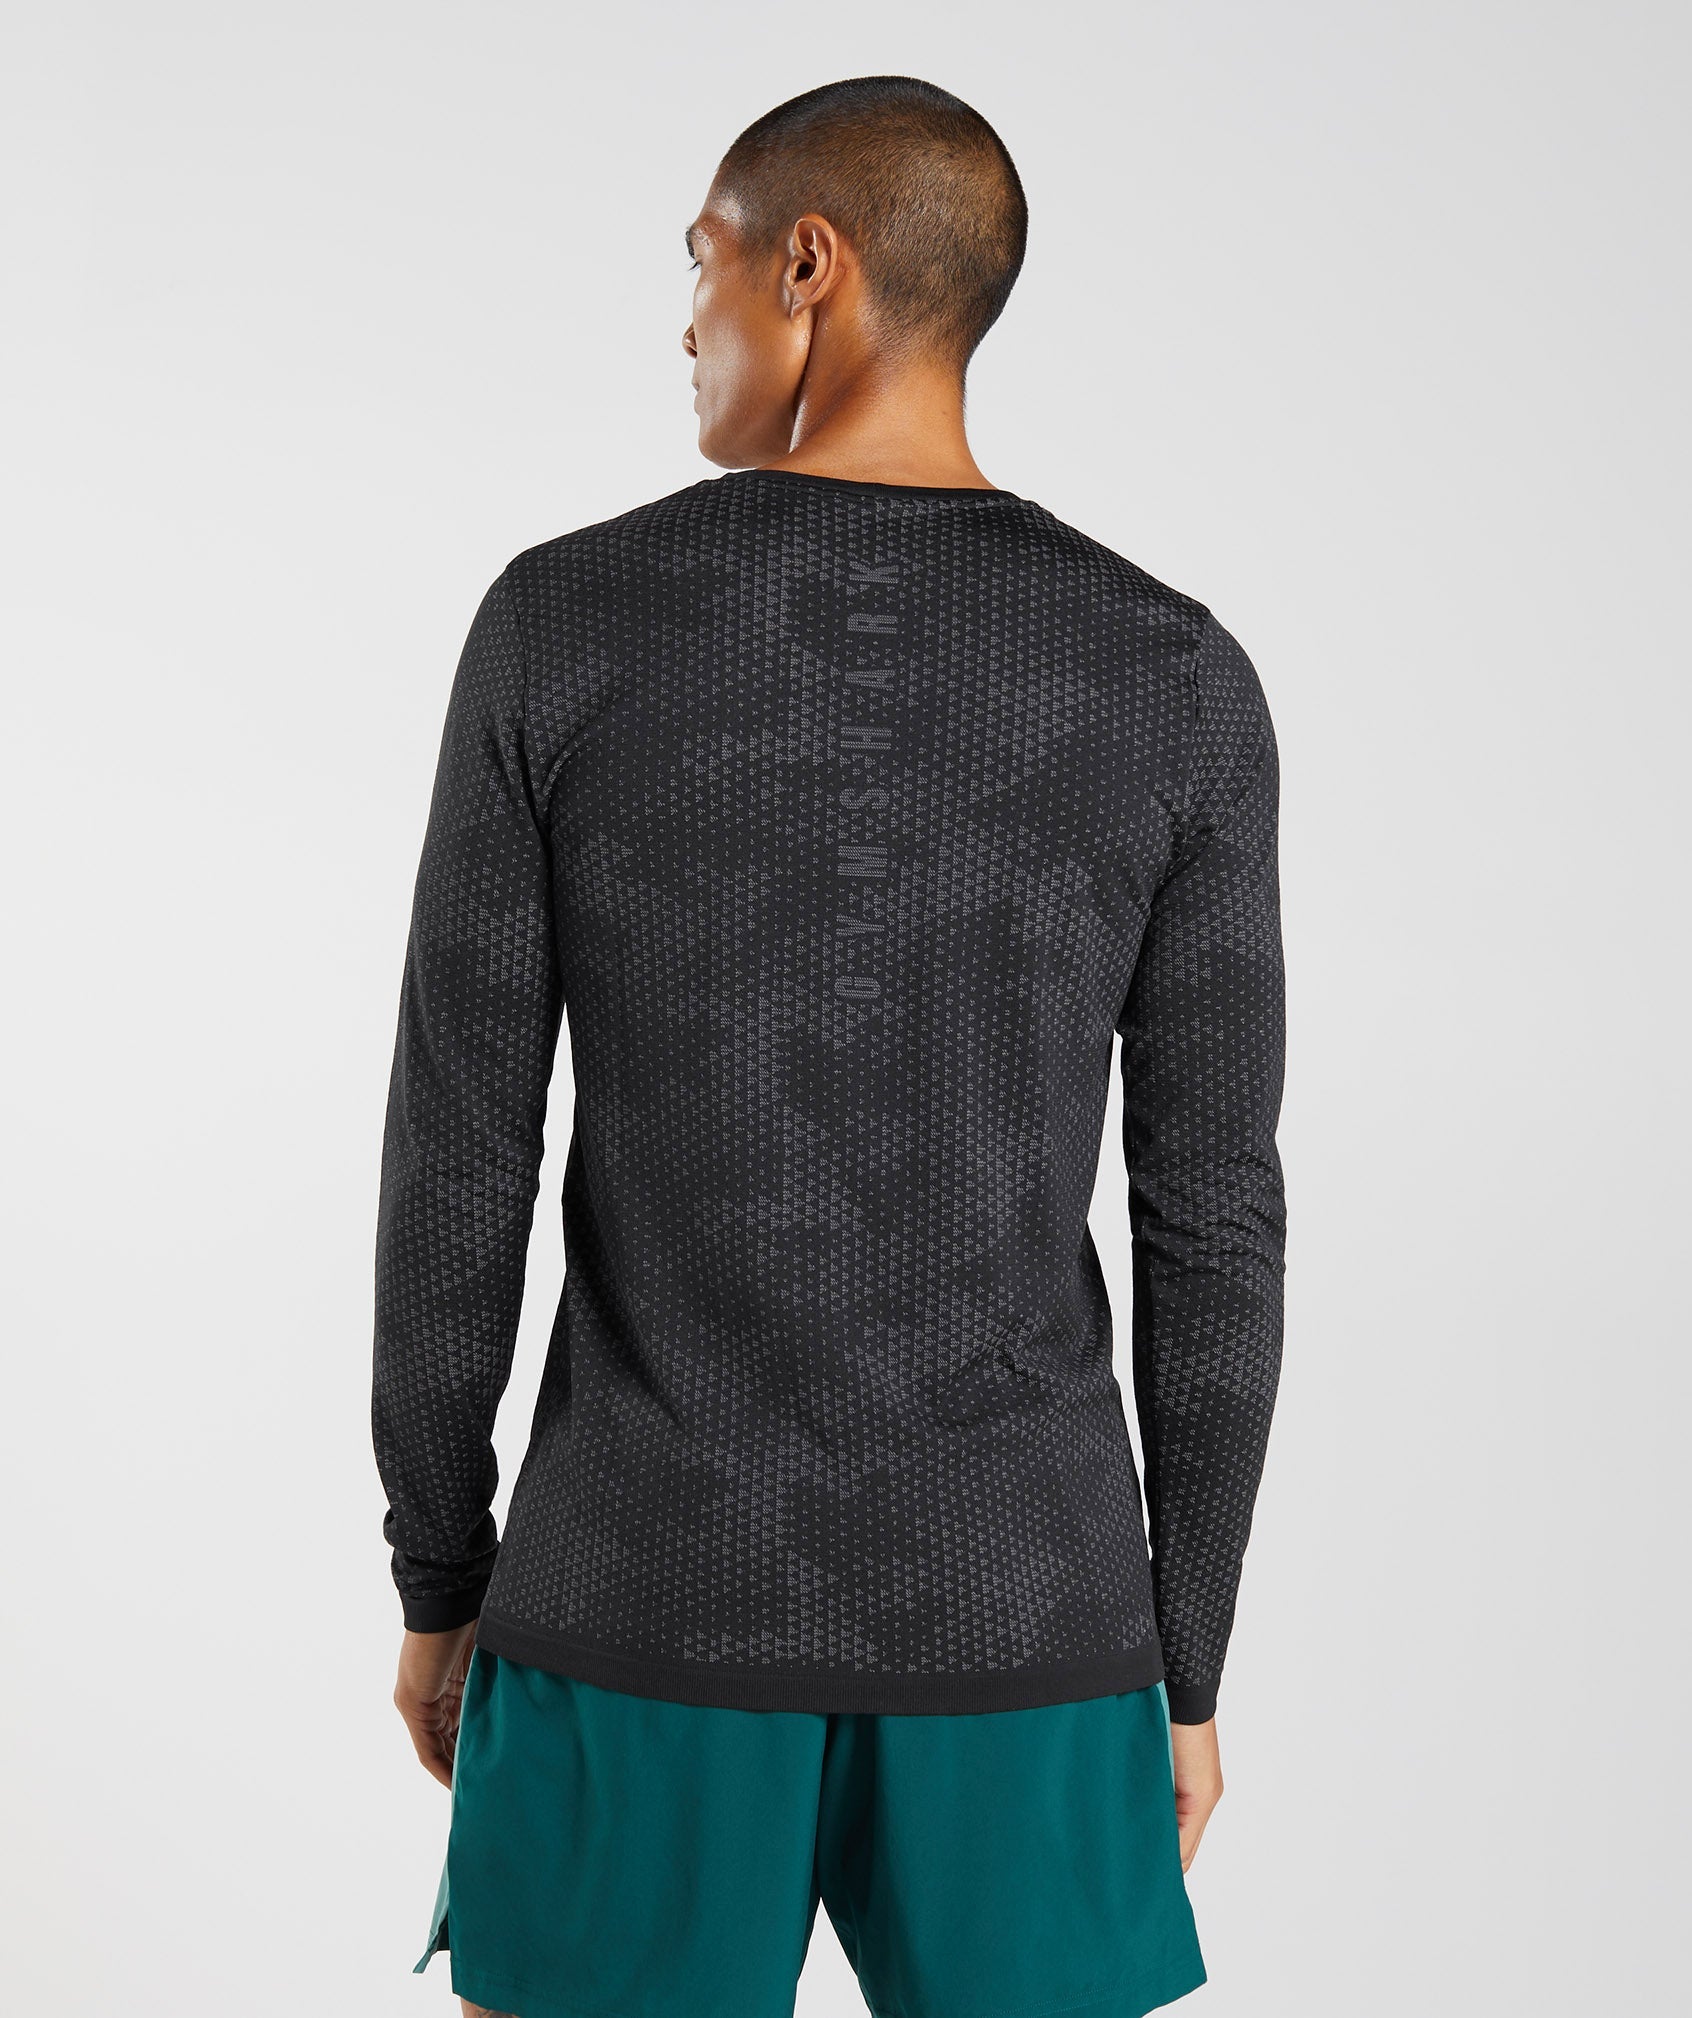 Sport Seamless Long Sleeve T-Shirt in Black/Silhouette Grey